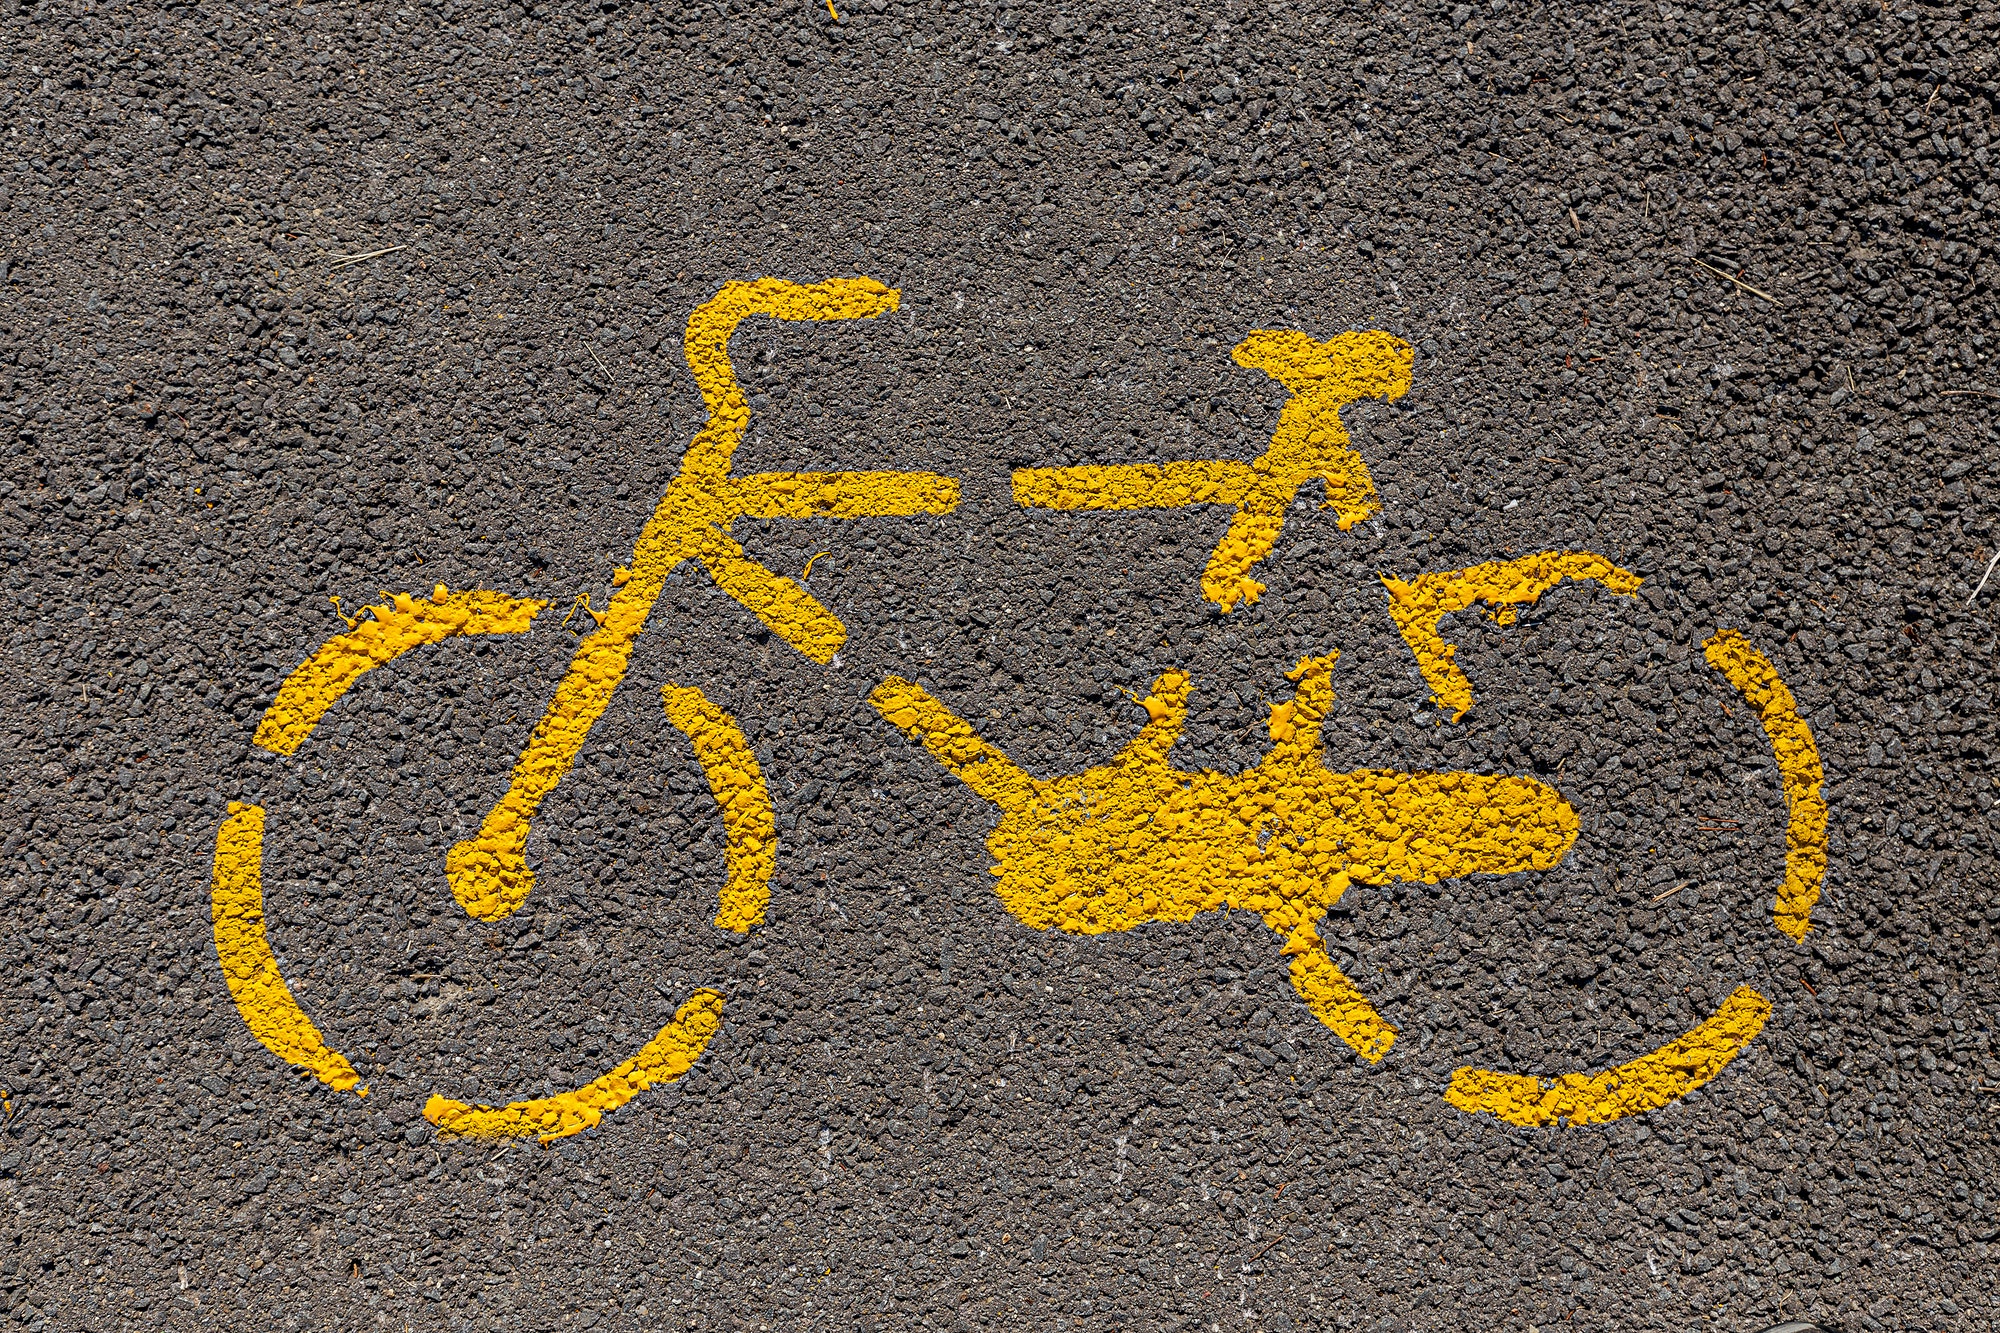 Yellow bicycle road marking